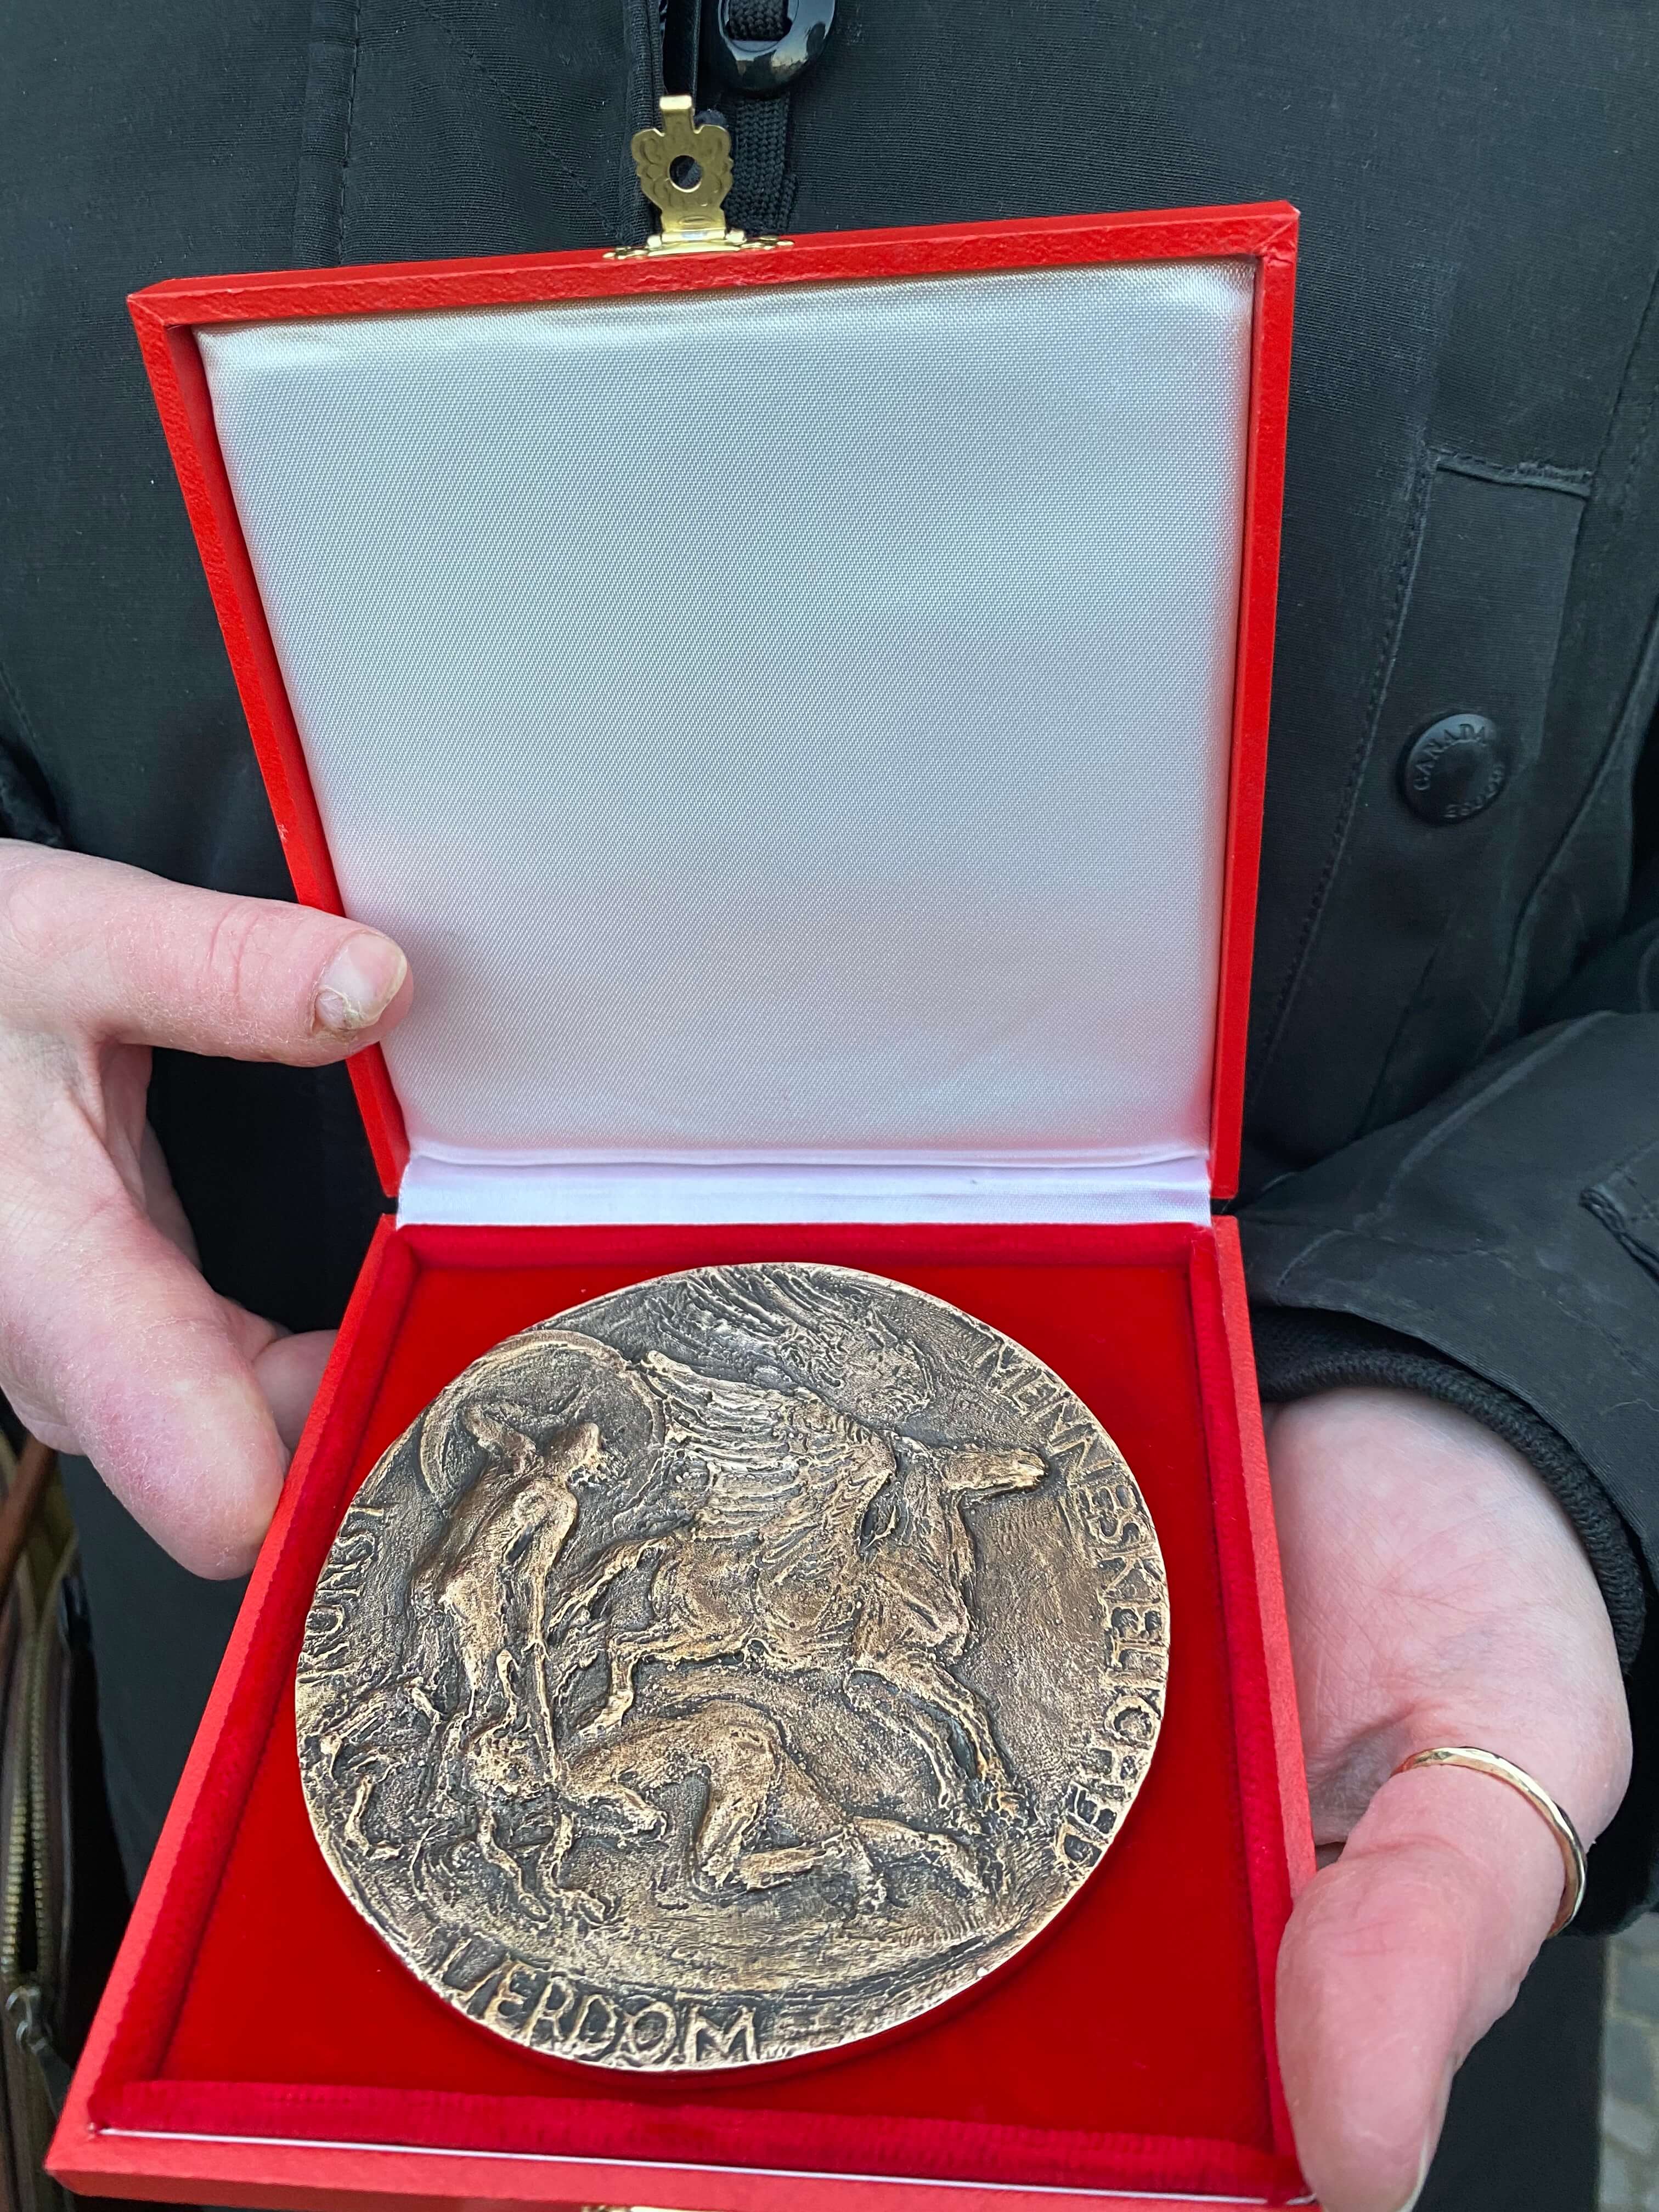 The Amalienborg Prize medal